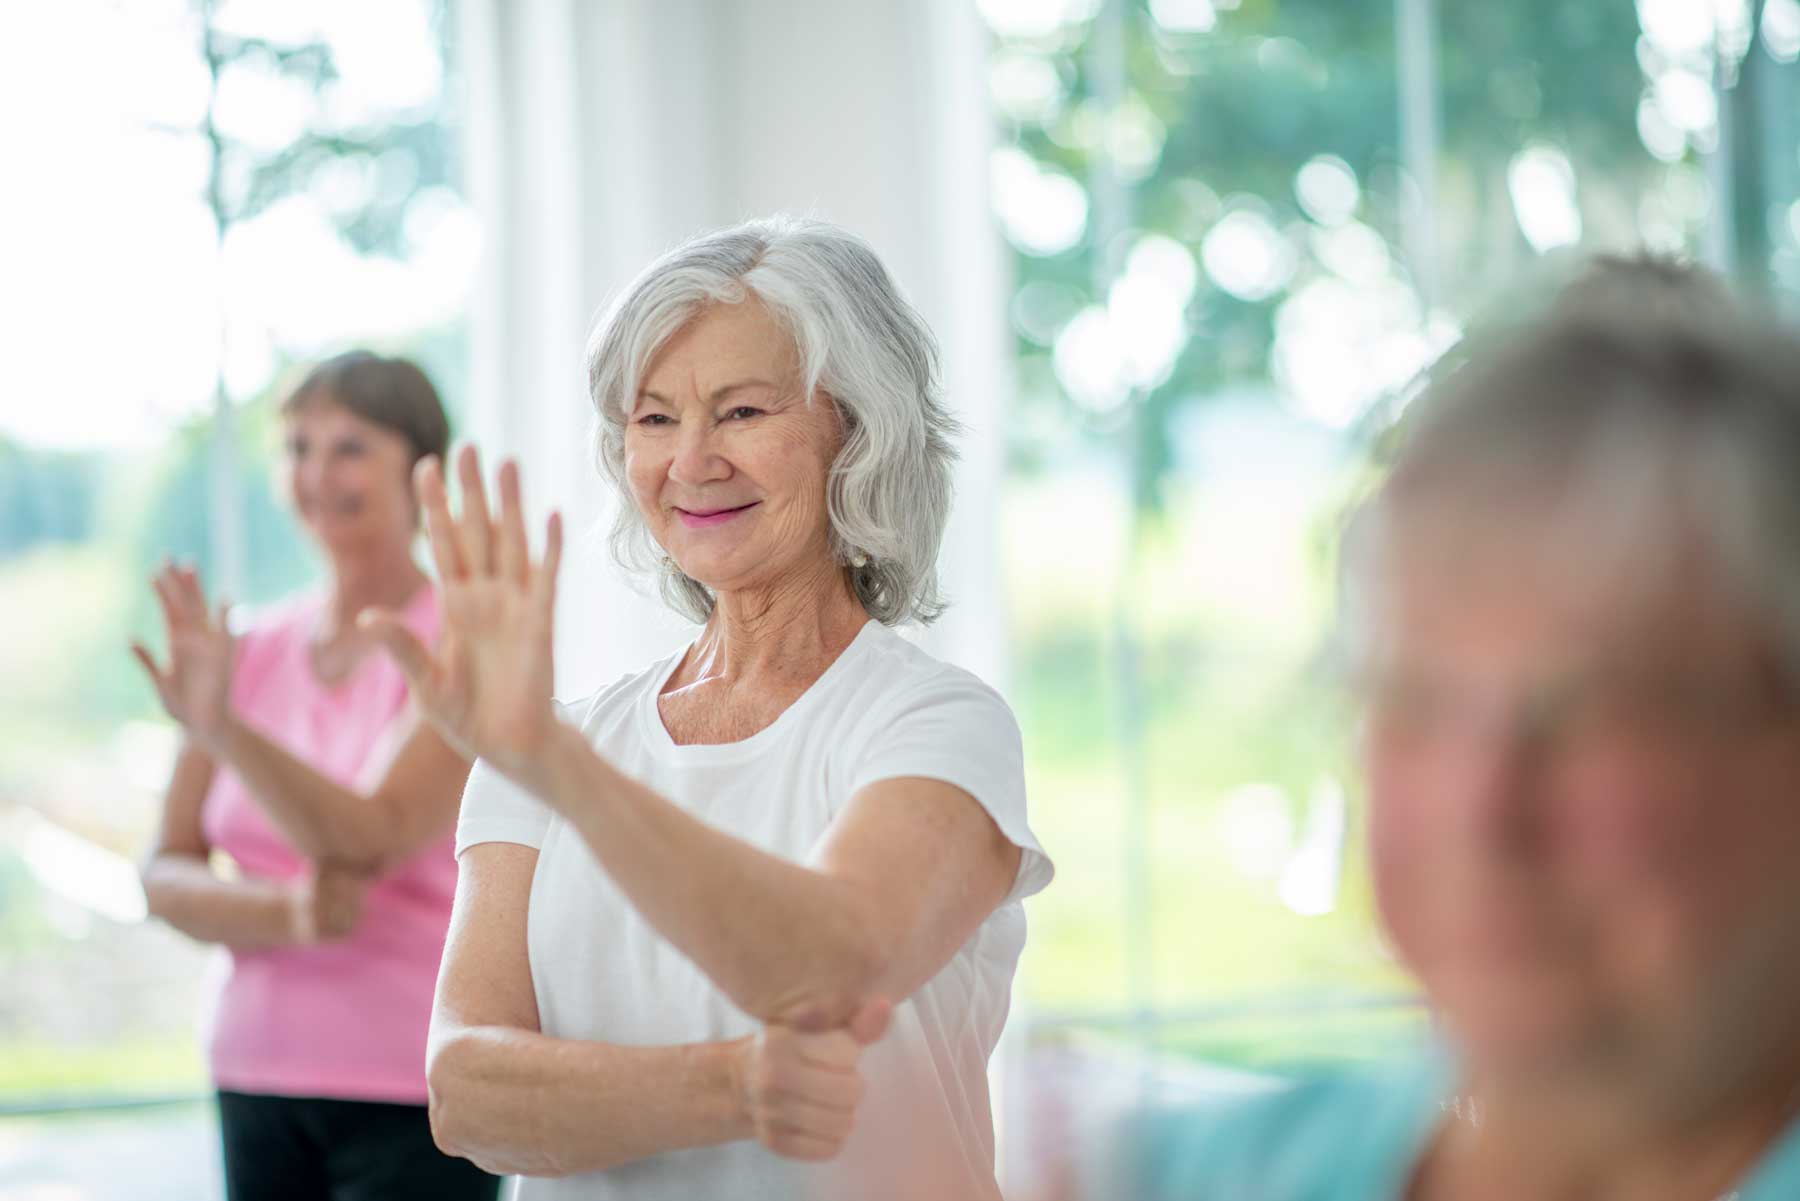 tai chi-wellbeing-positive mental health-balance-elderly-posture